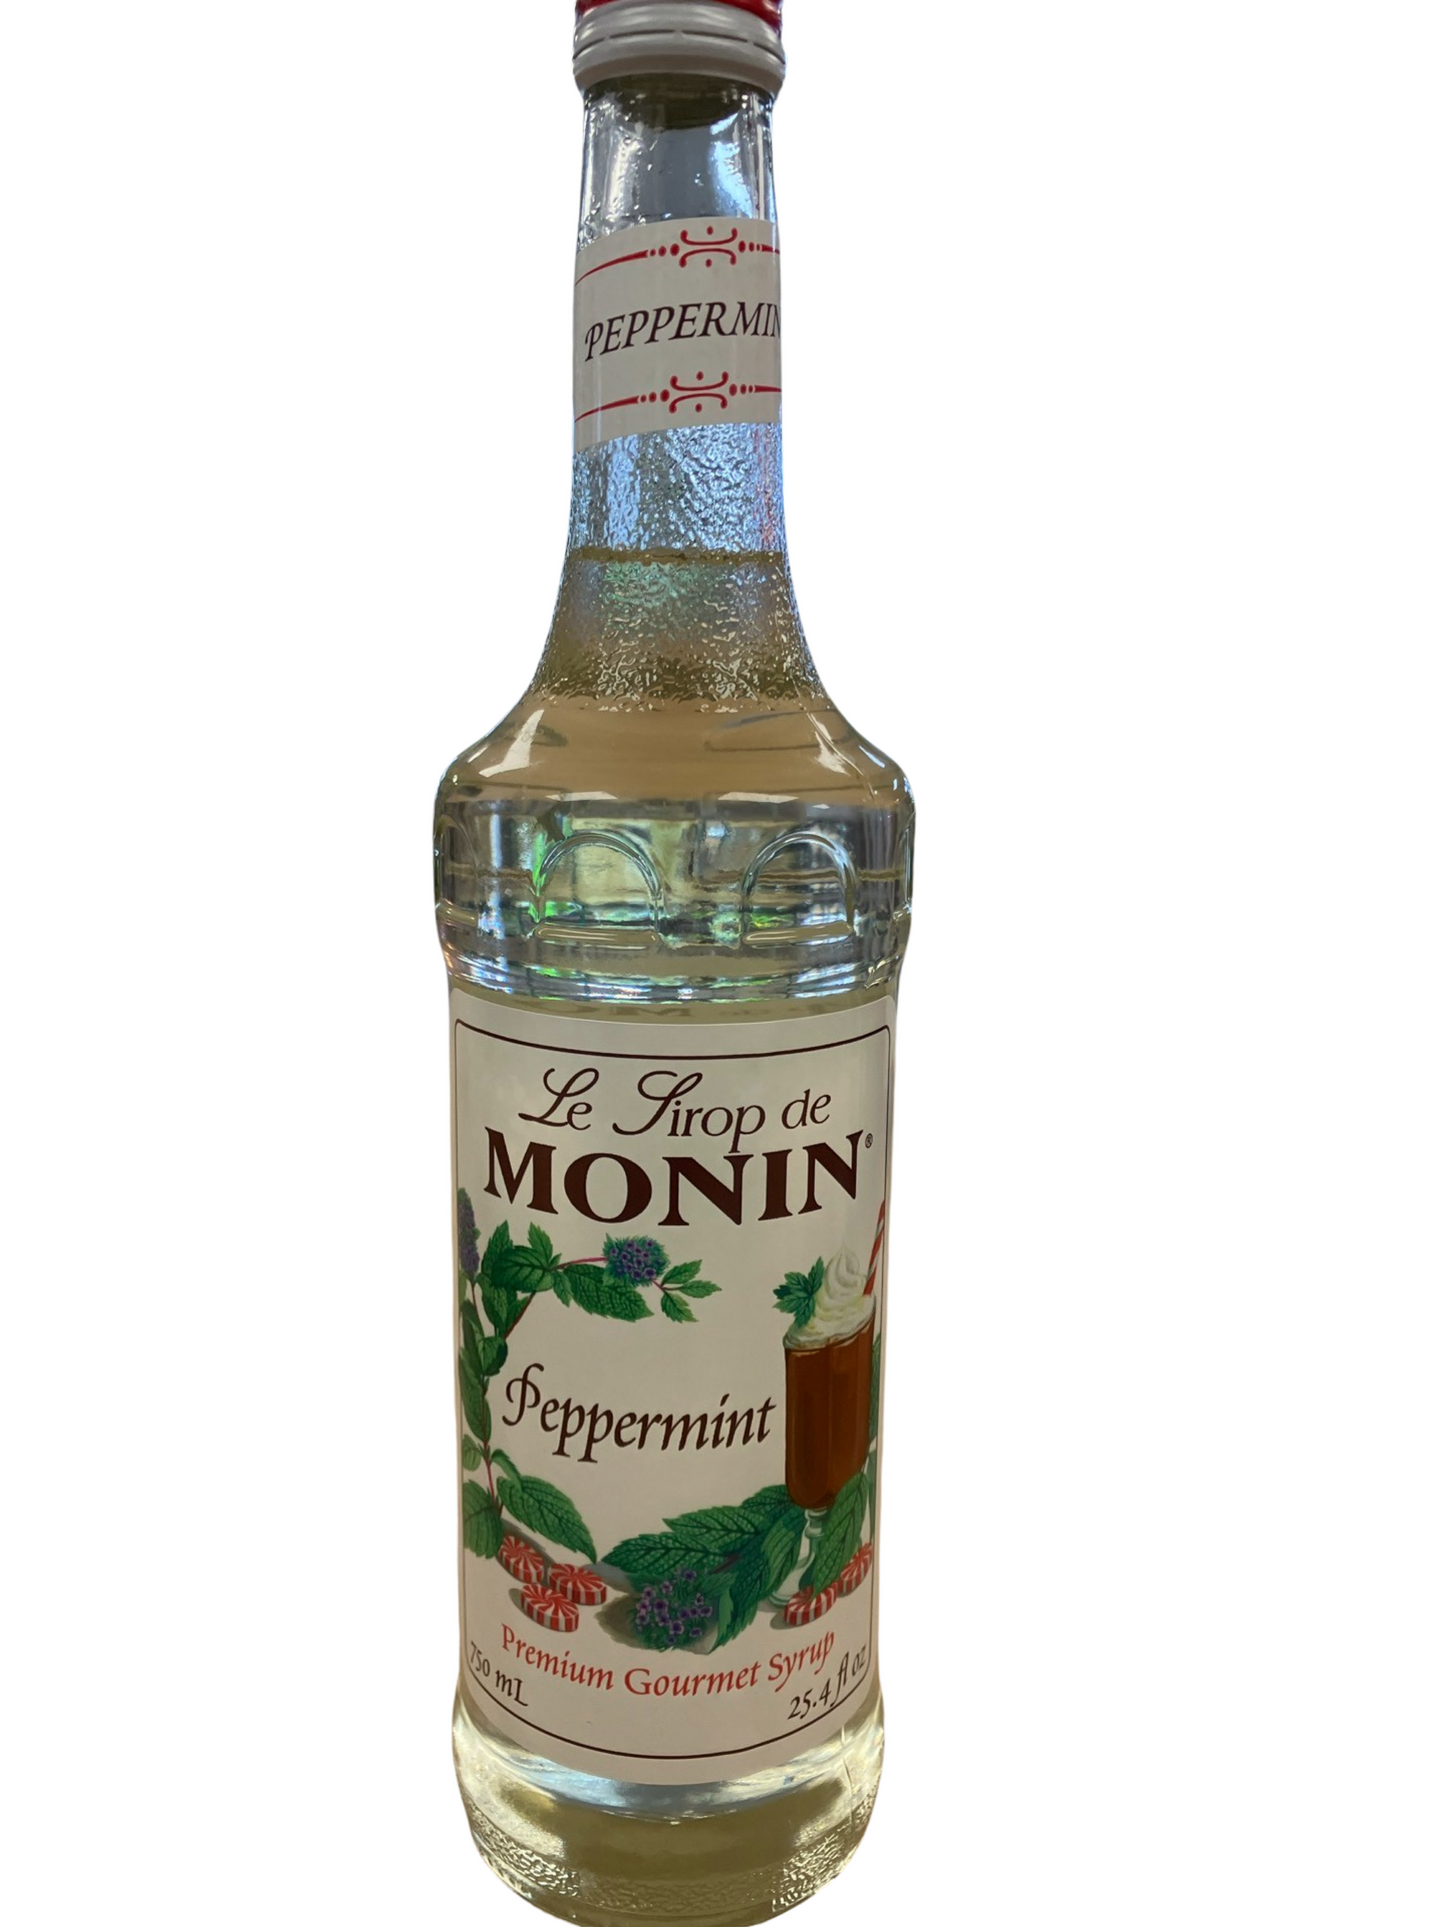 Monin - Peppermint, 750ml, Glass Bottle